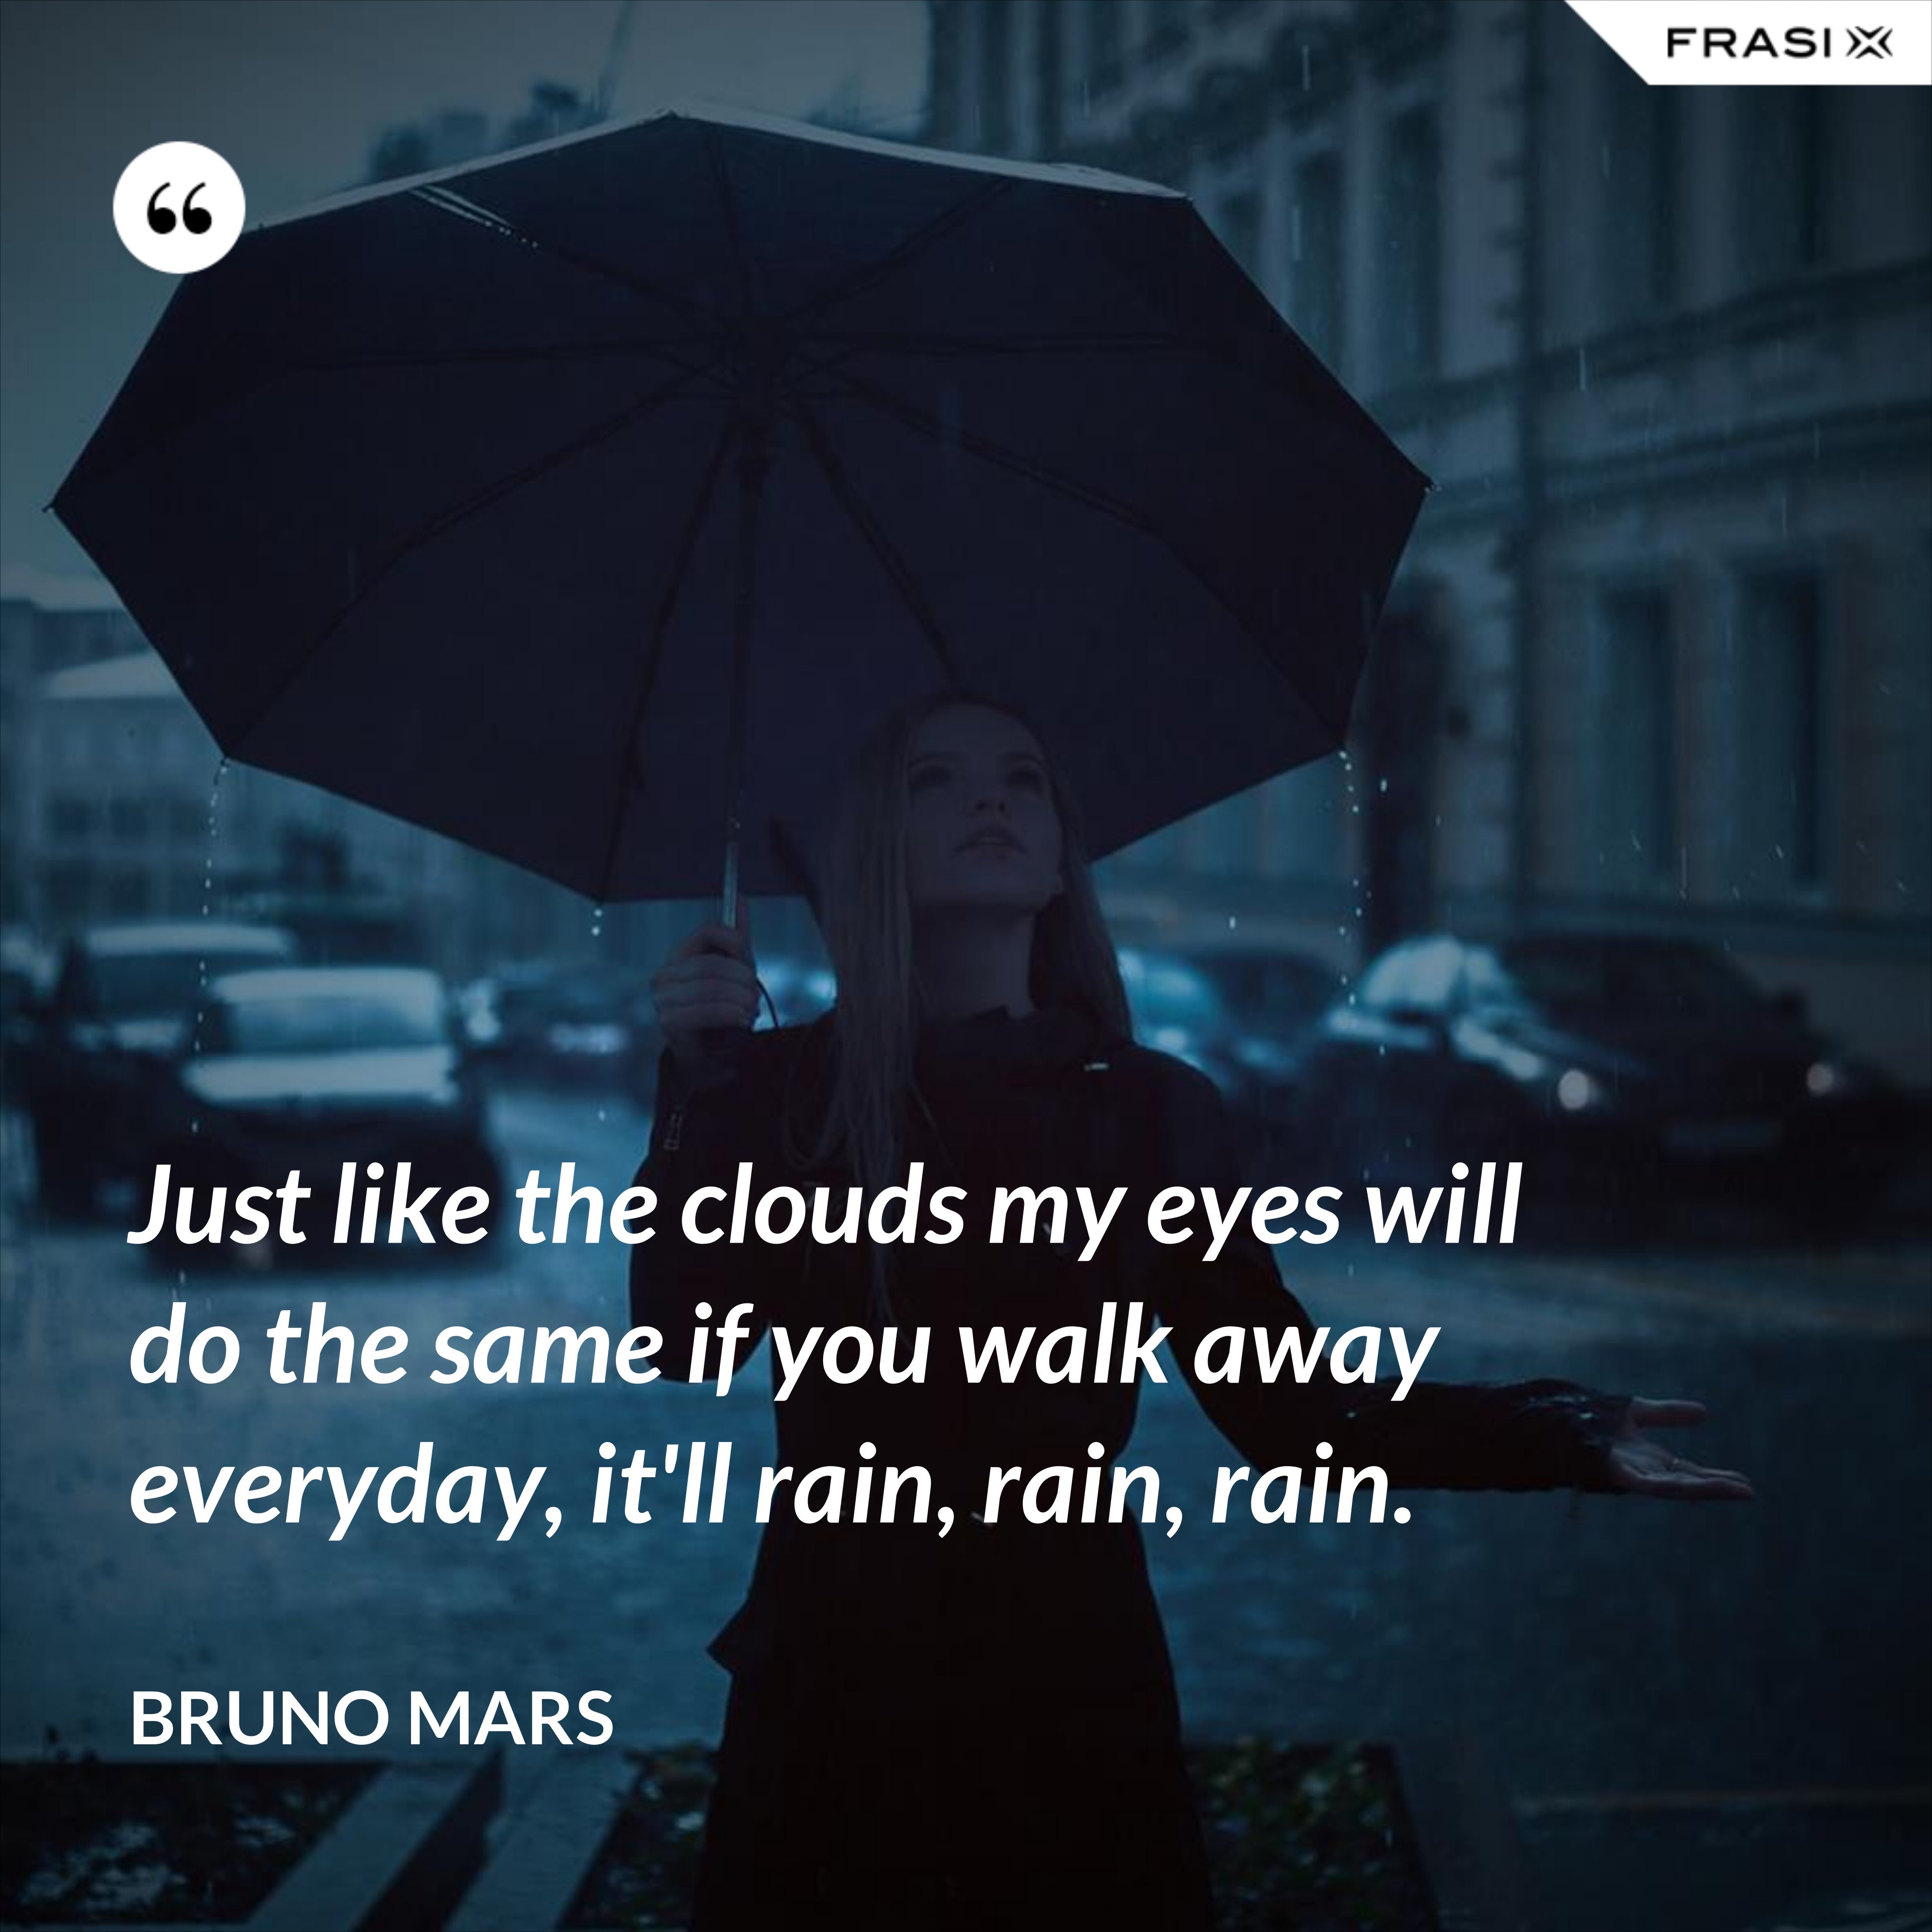 Just like the clouds my eyes will do the same if you walk away everyday, it'll rain, rain, rain. - Bruno Mars